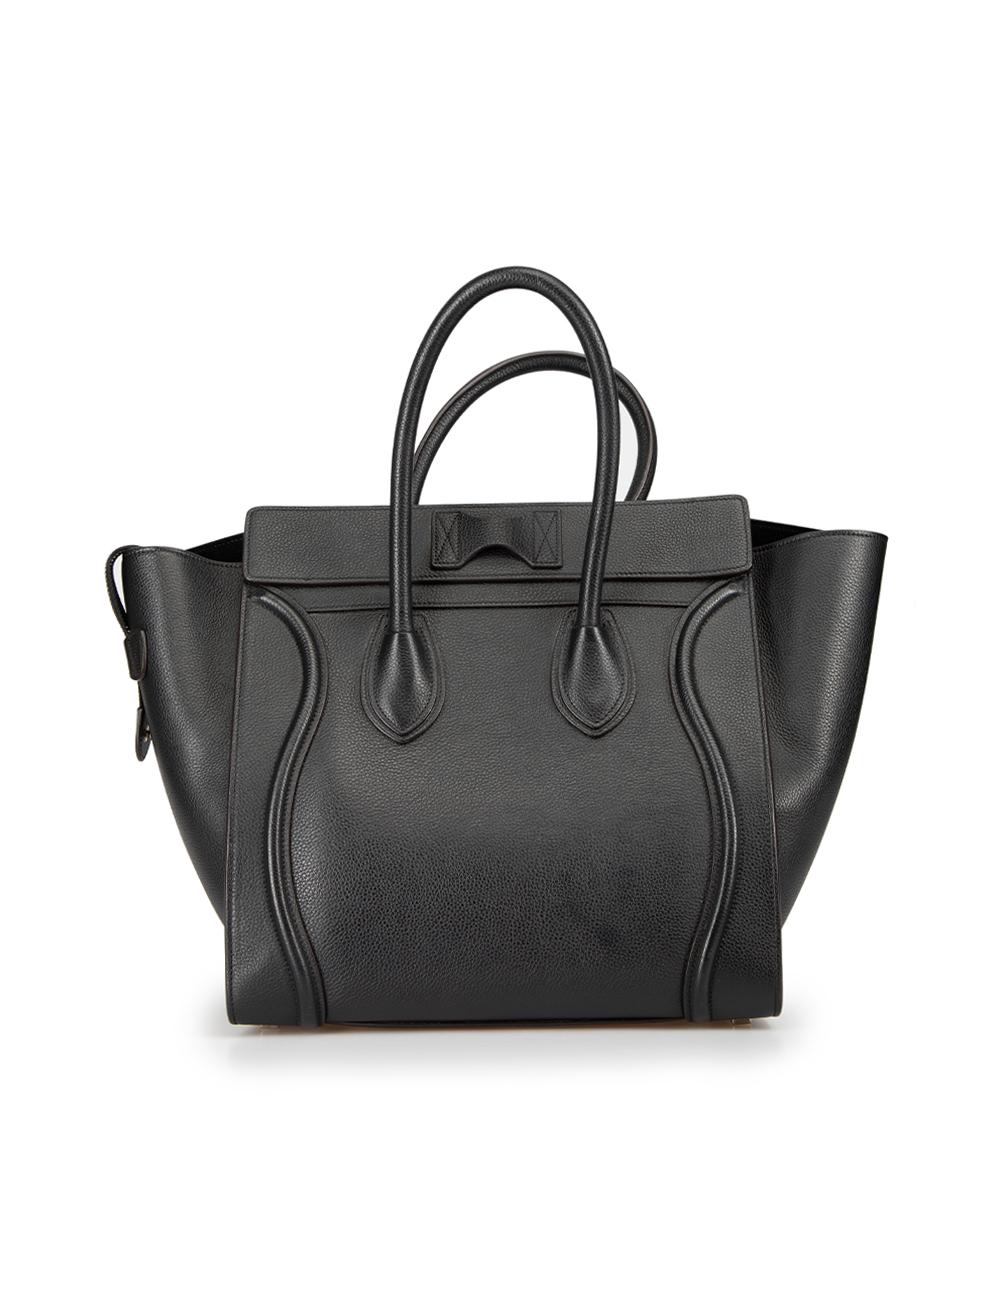 Céline Women's Black Leather Mini Luggage Tote In Good Condition In London, GB